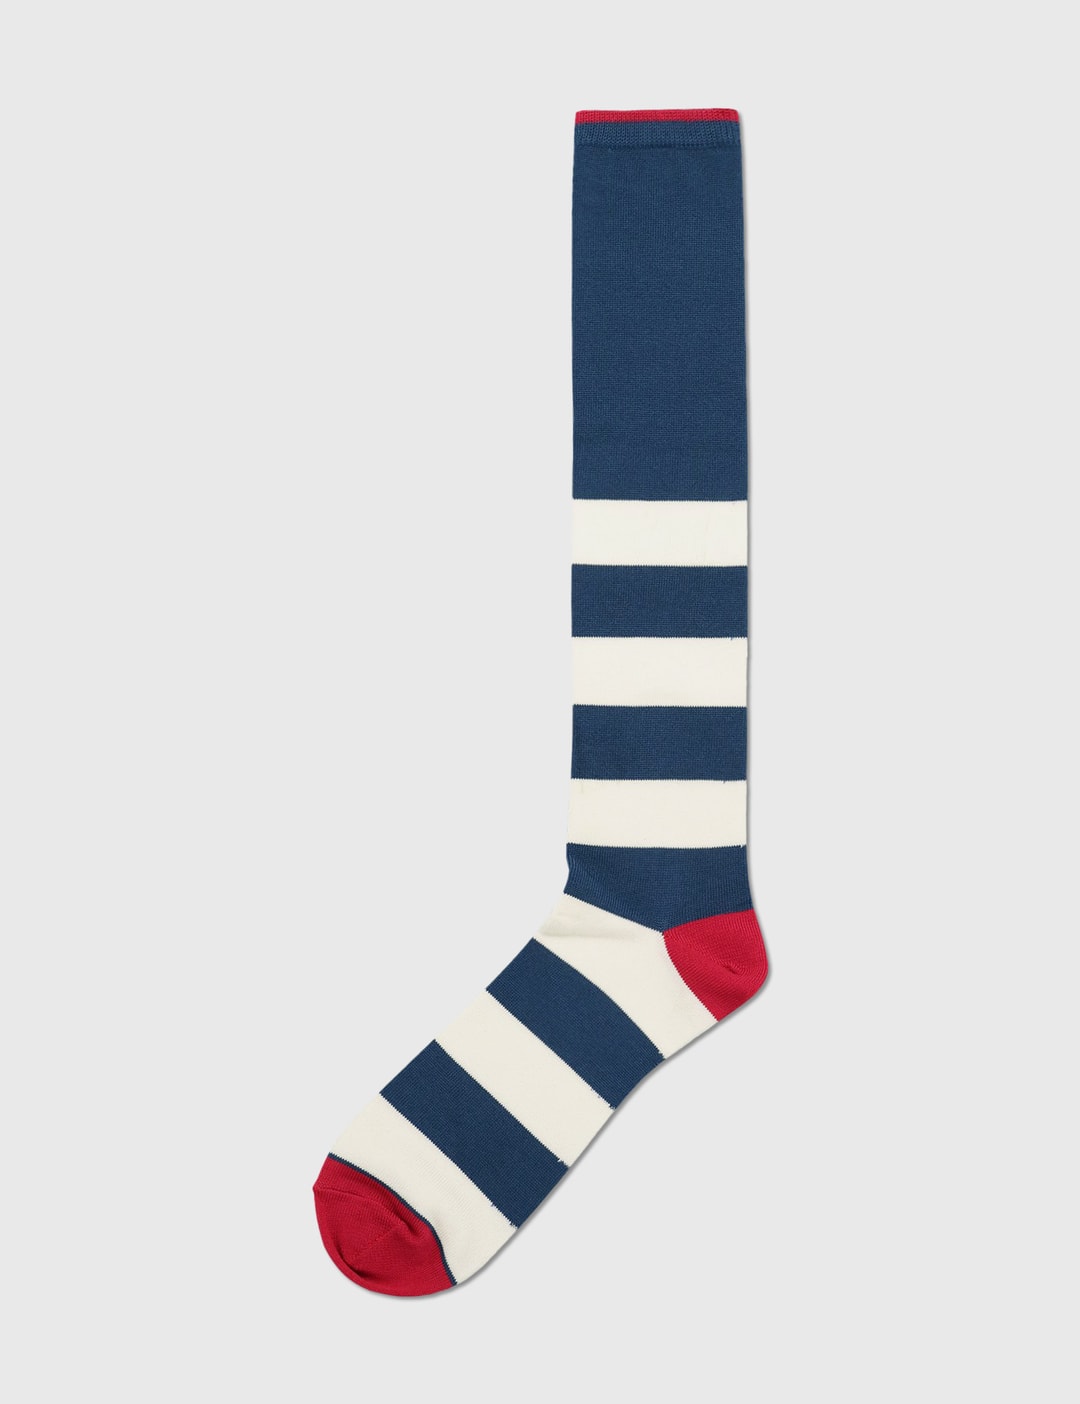 Decka Socks - Heavyweight Knee-high Striped Socks | HBX - Globally ...